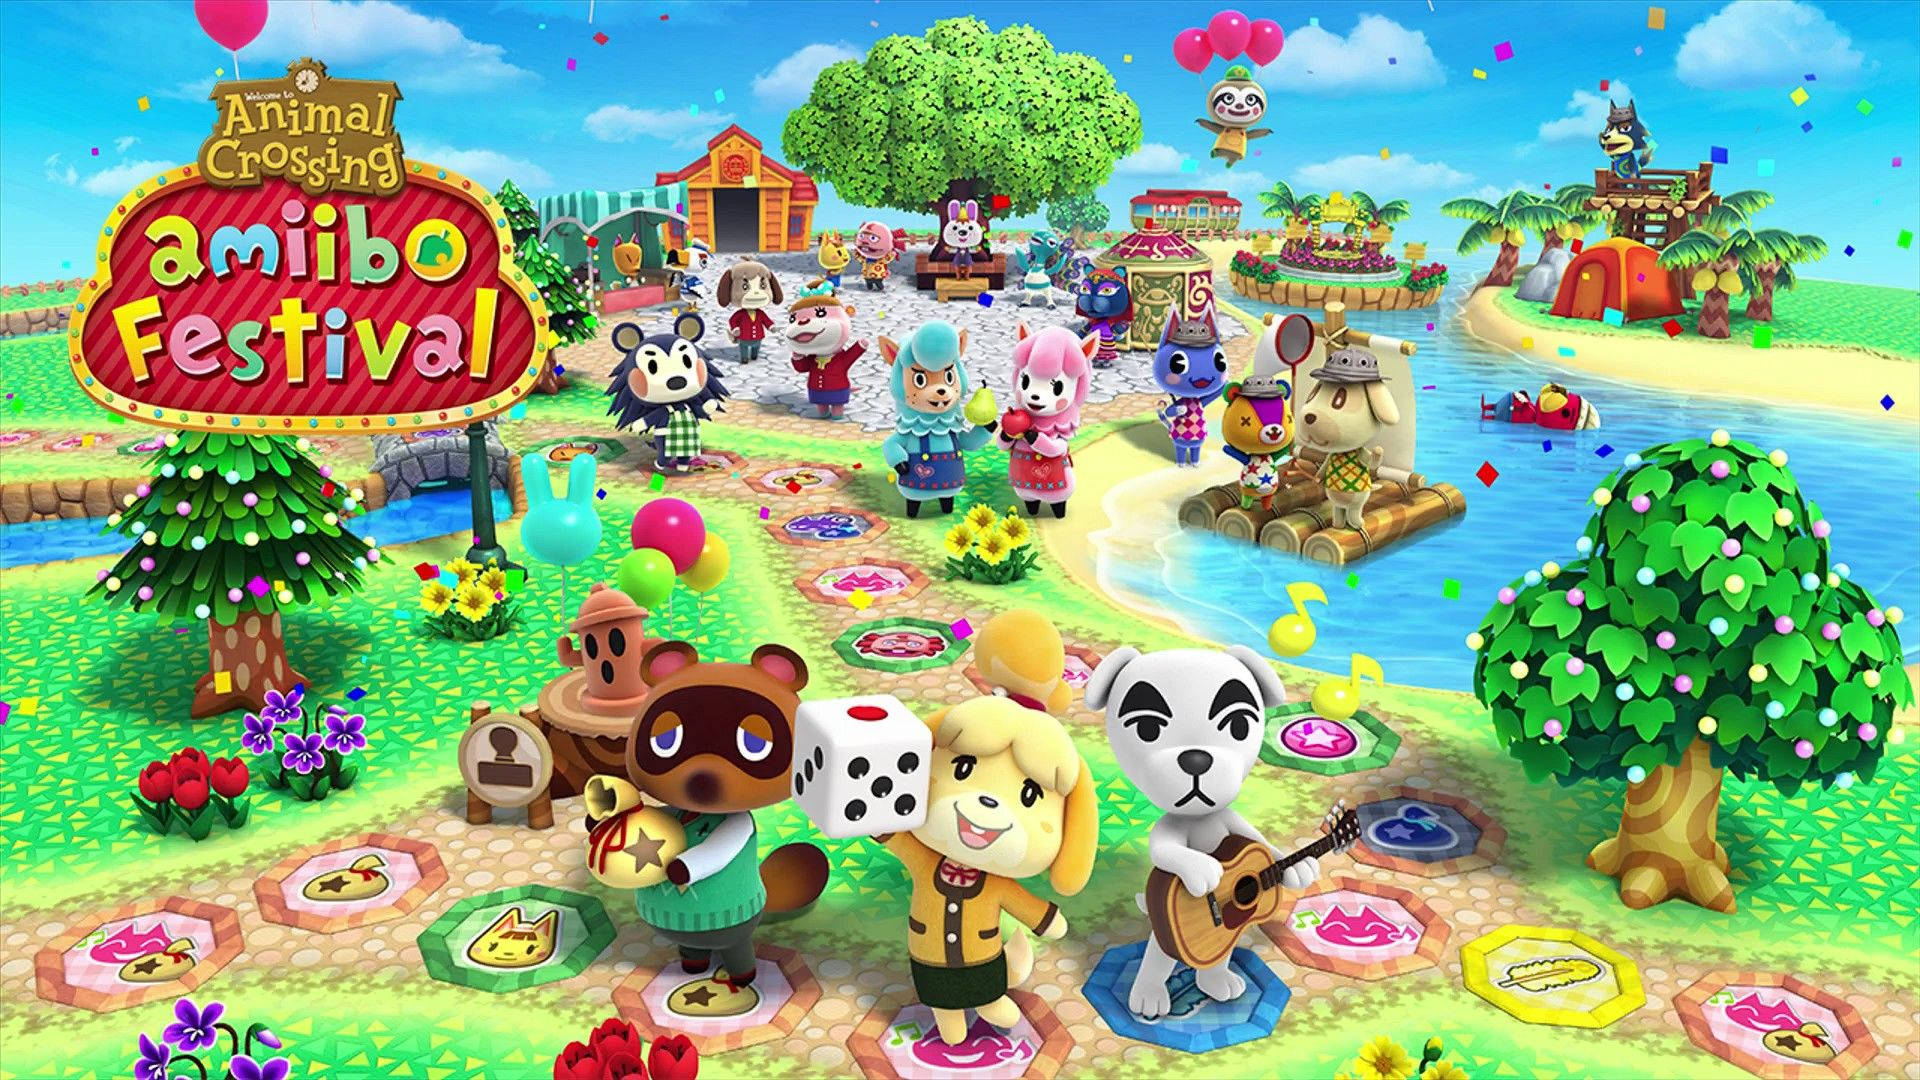 “Enjoy the Amiibo Festival with Animal Crossing” Wallpaper